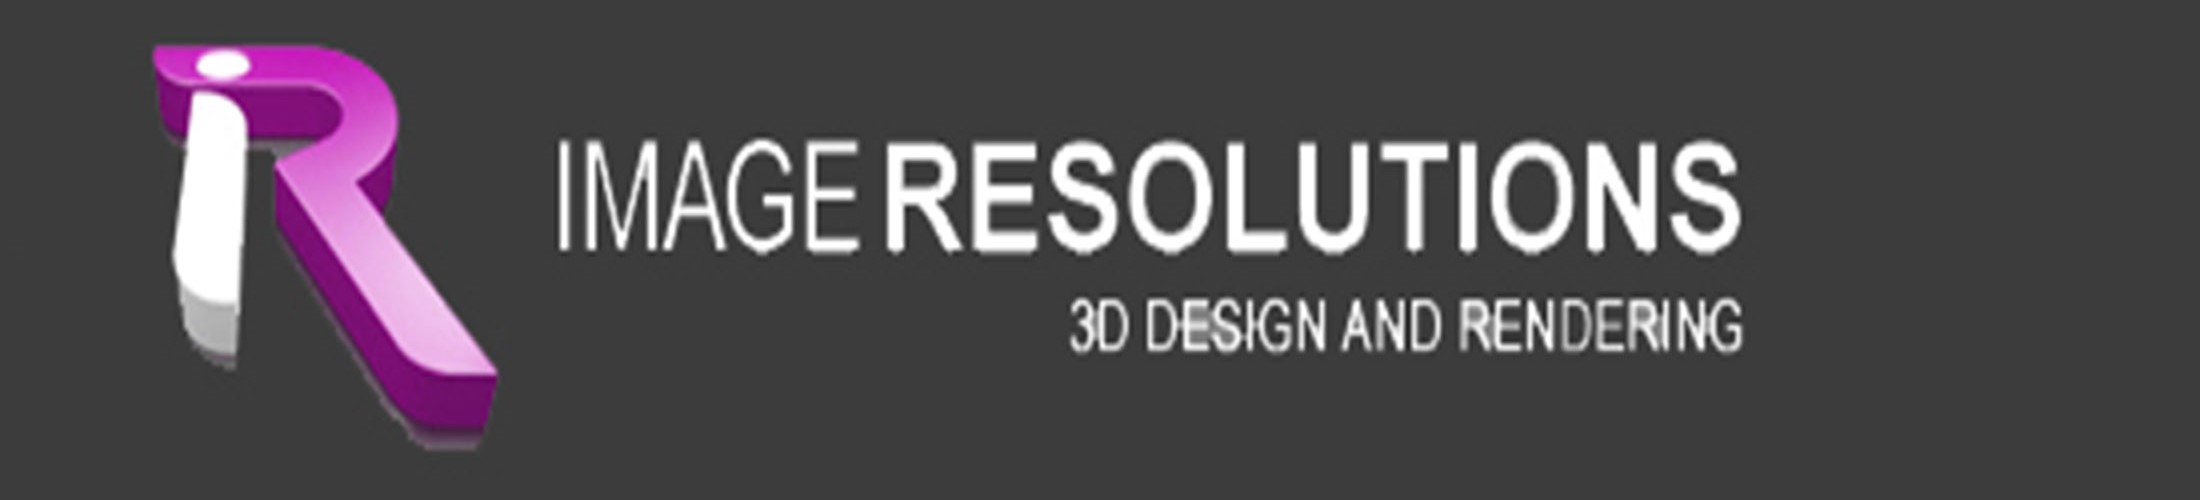 Image Resolutions 3D Design Services Logo